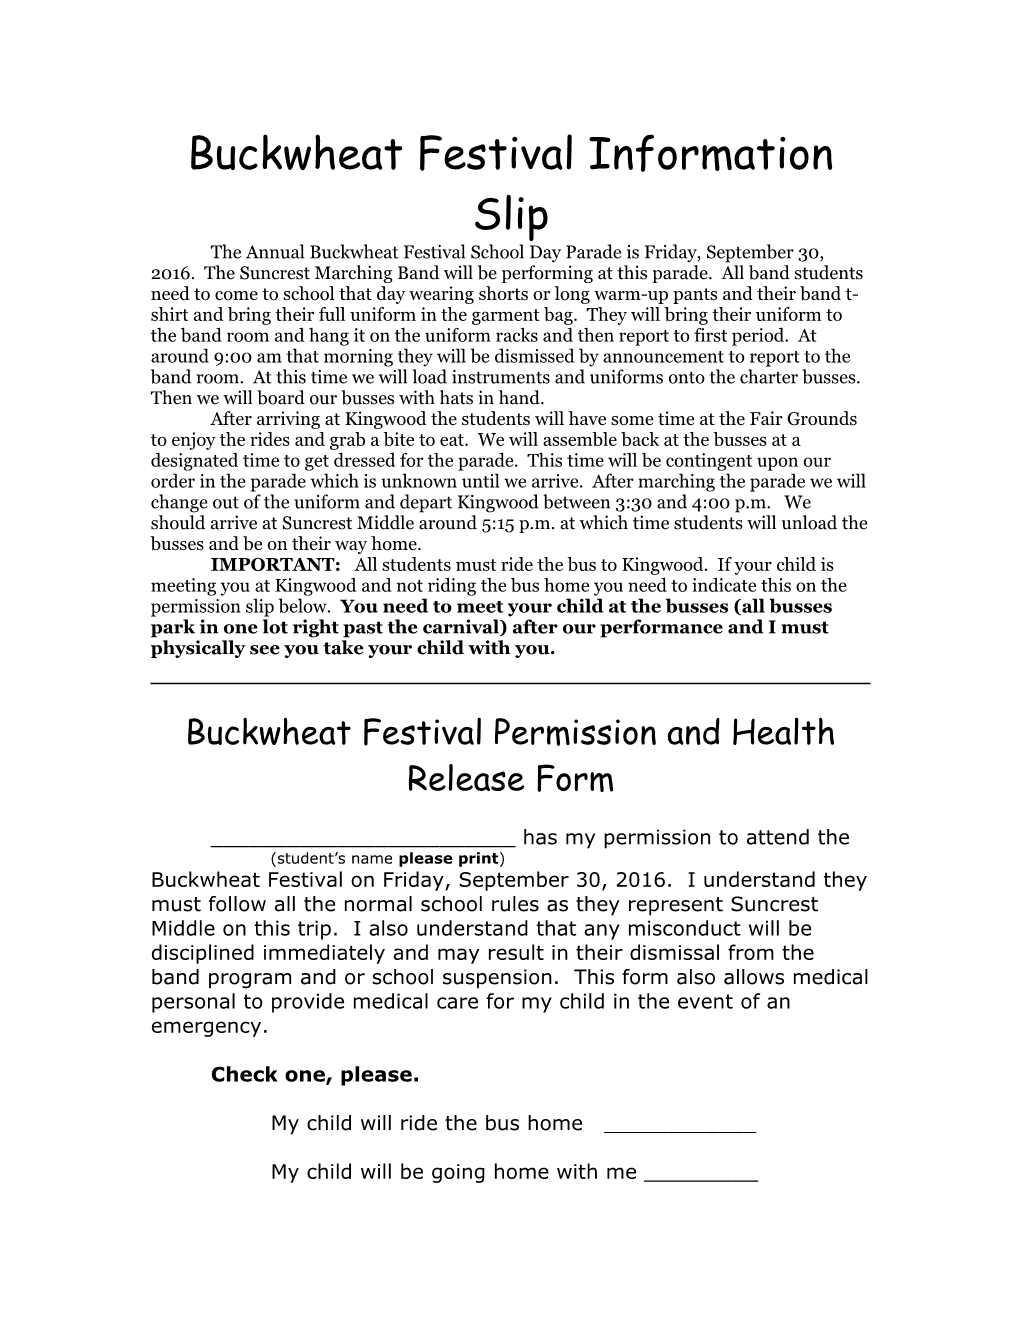 Buckwheat Festival Information Slip